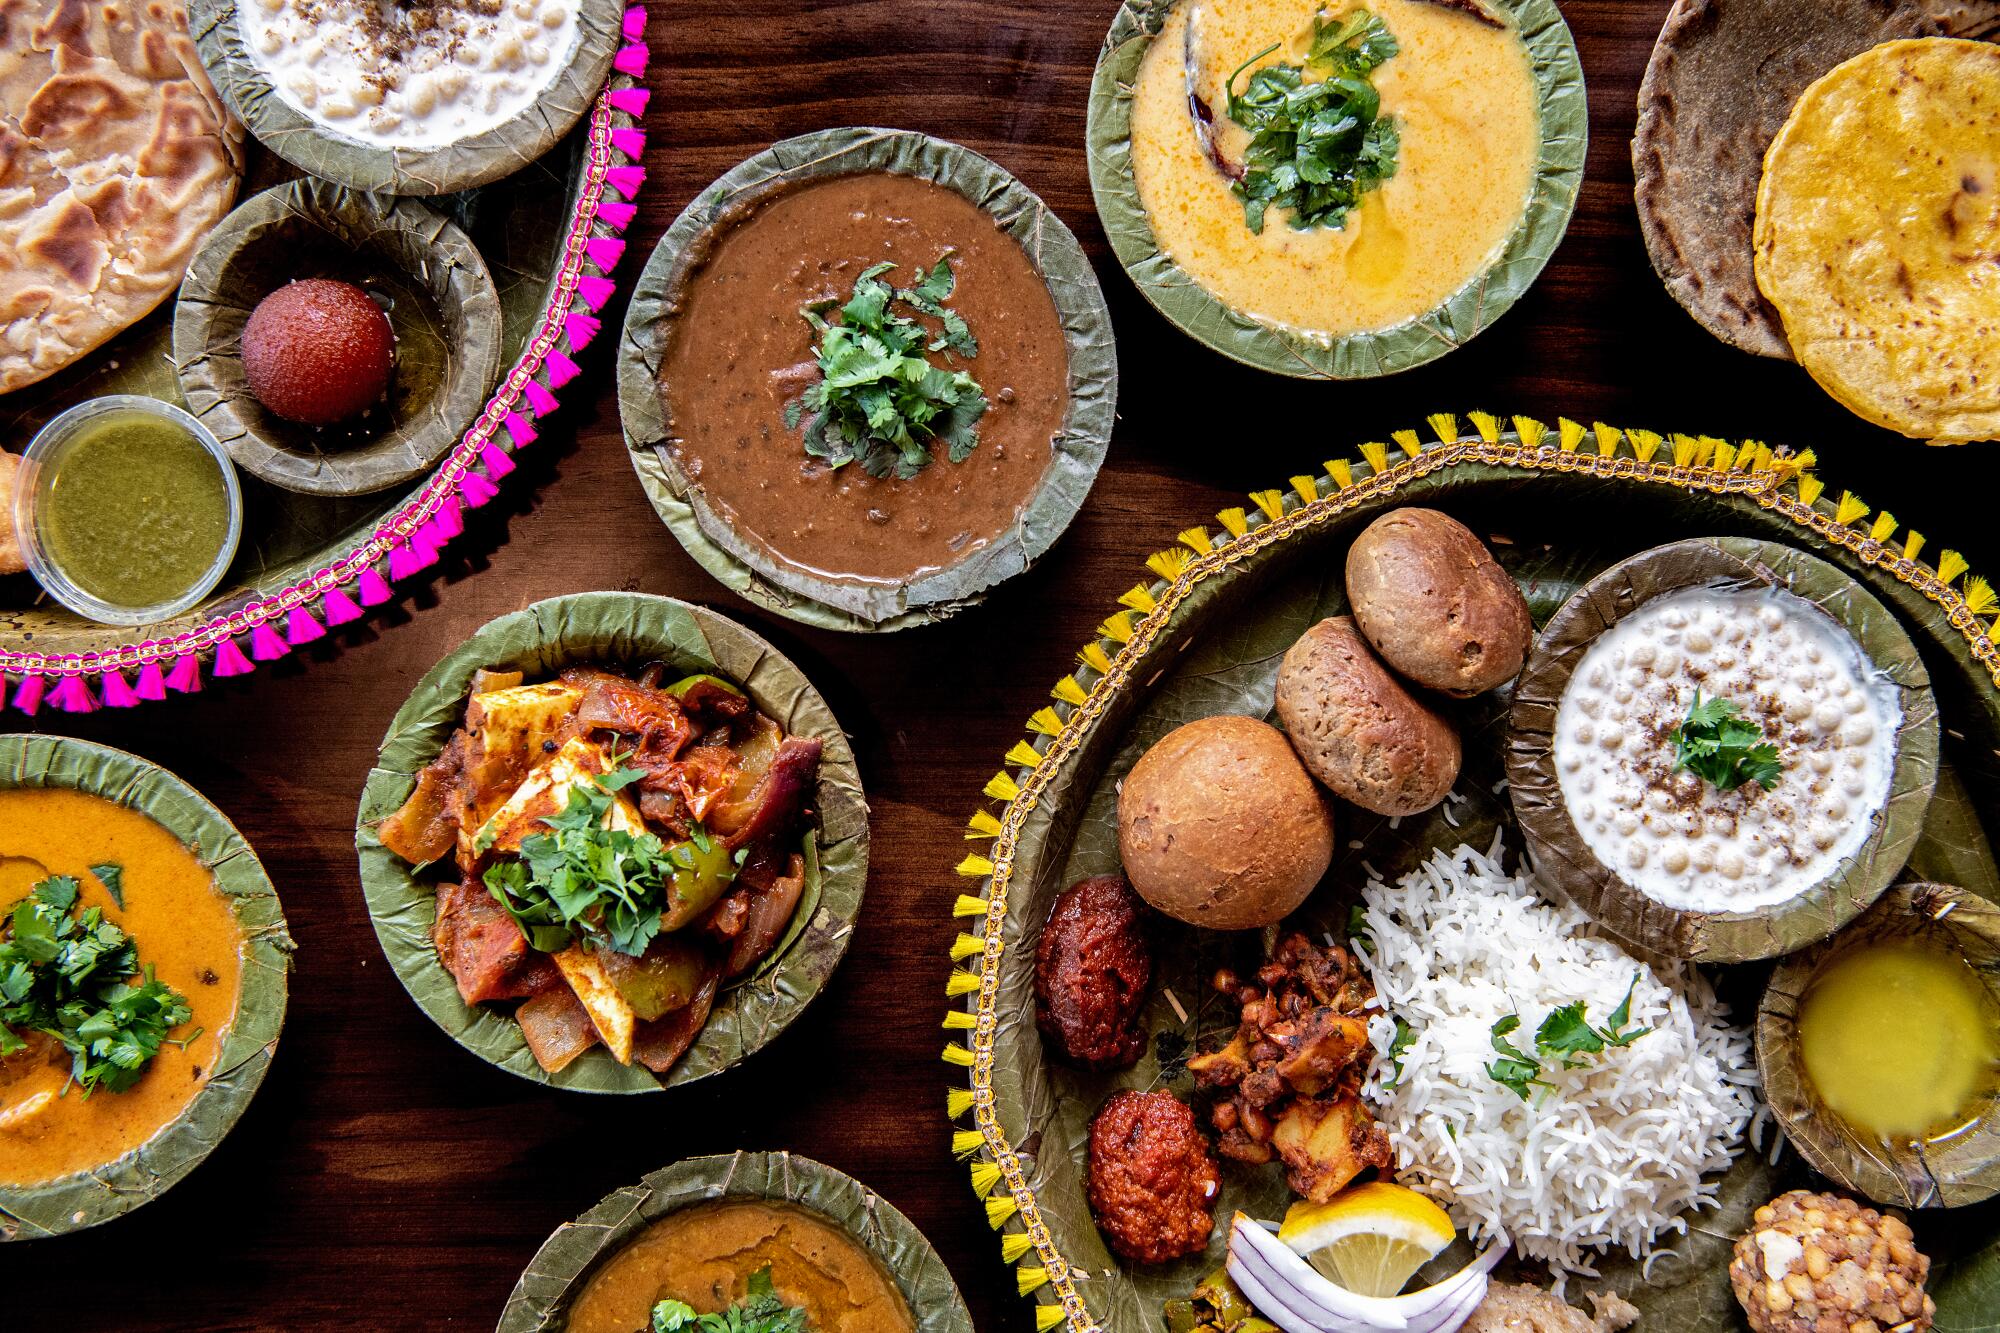 A spread of the shartaj and maharaja thali platters from Bhookhe restaurant